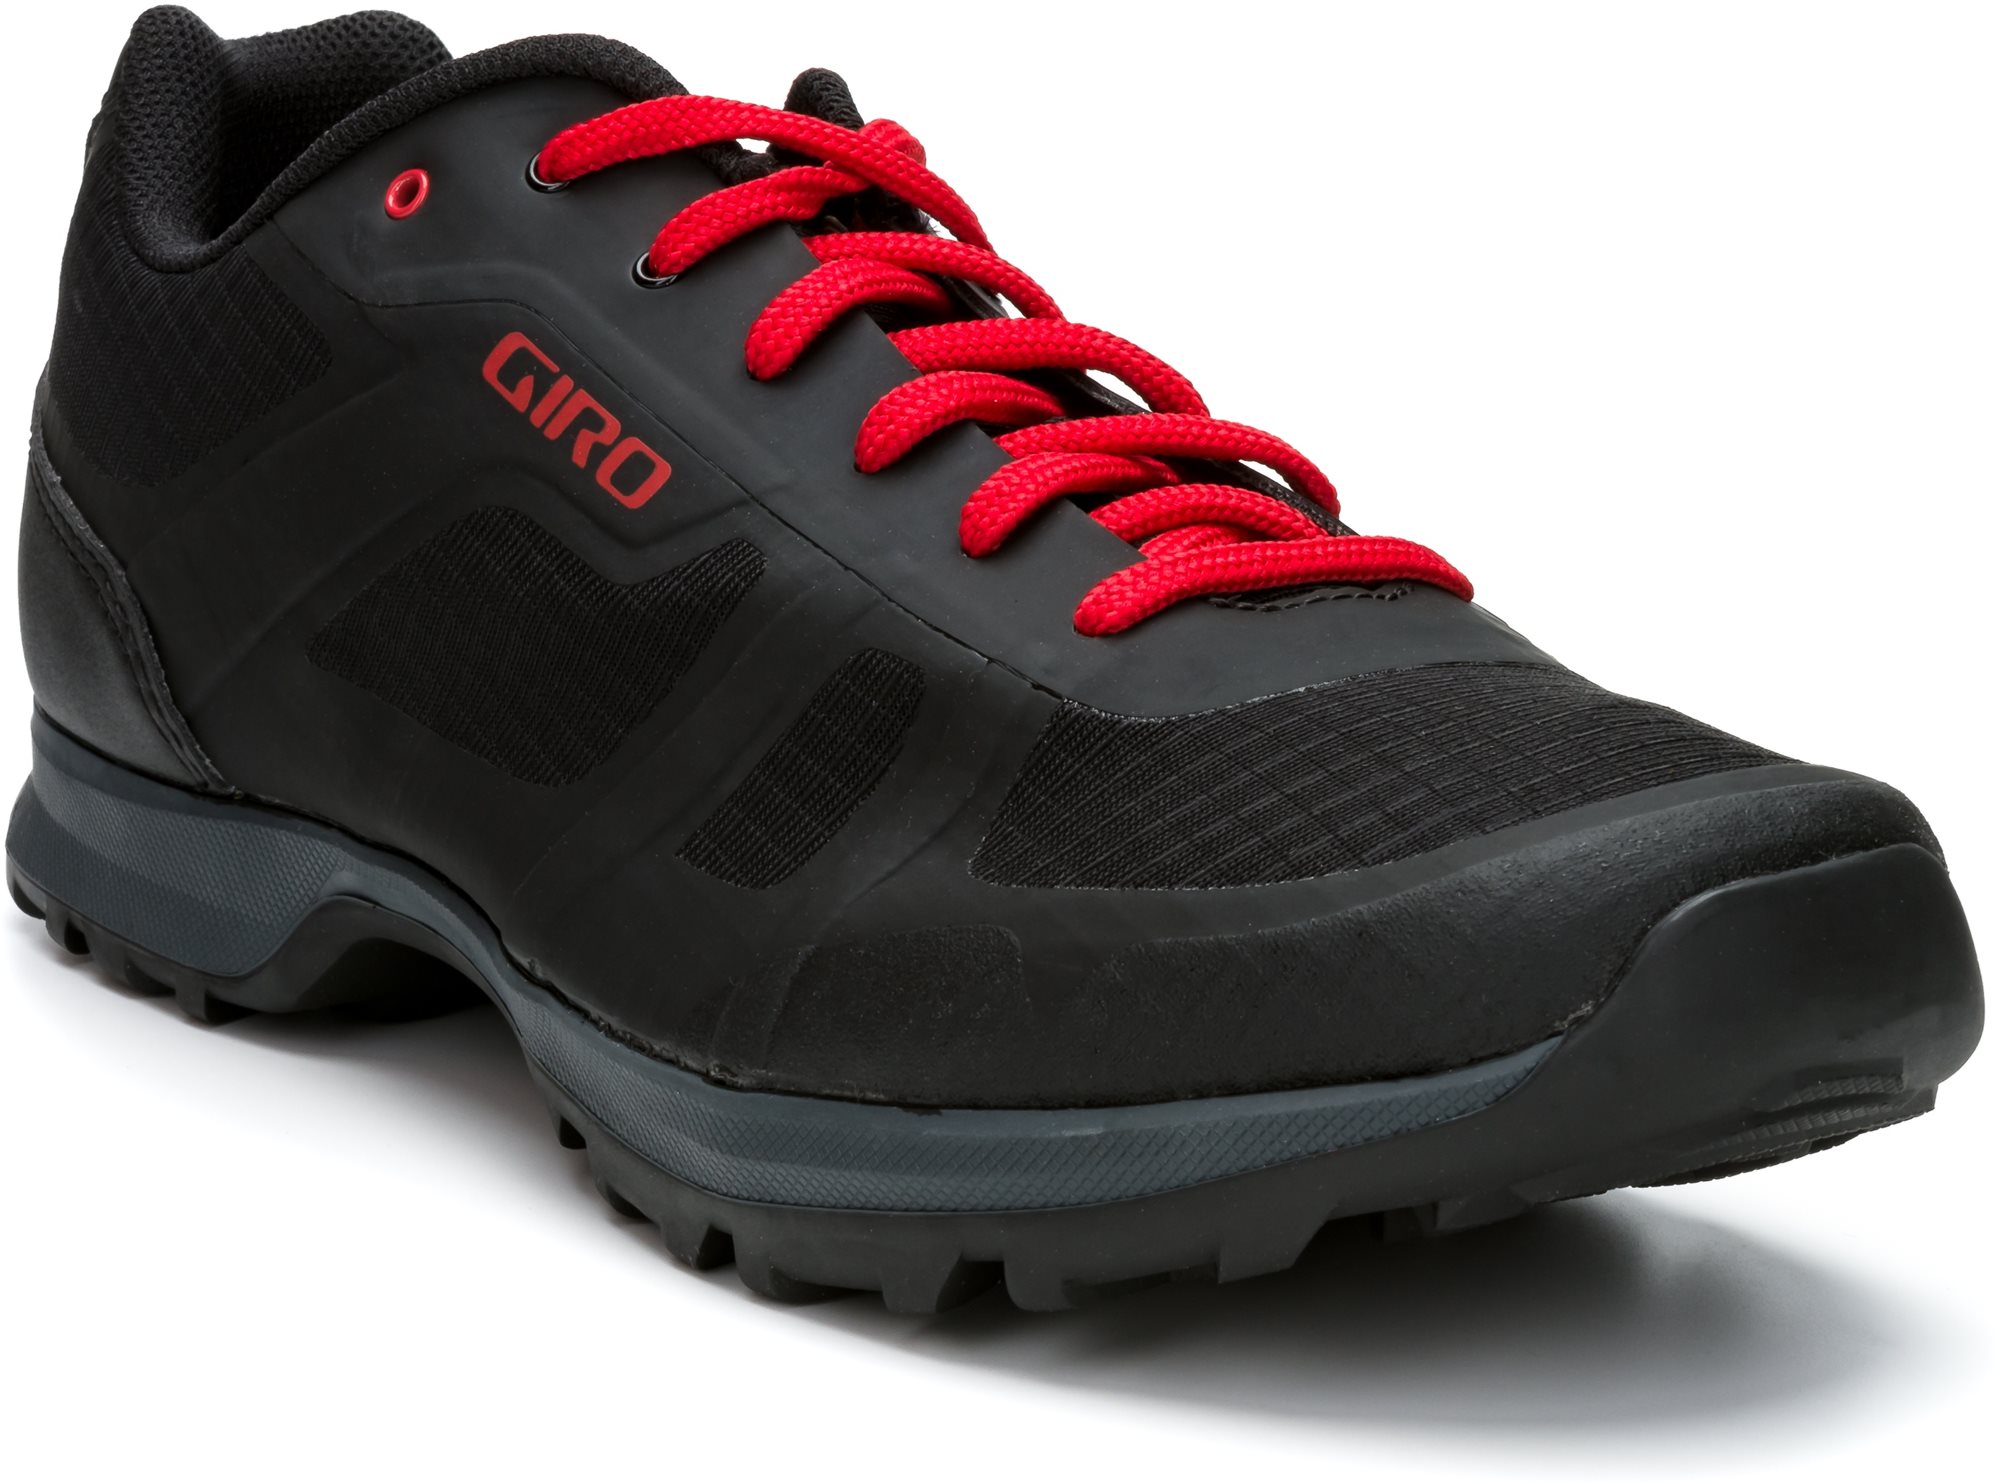 GIRO Gauge kerékpáros cipő, fekete/világos piros